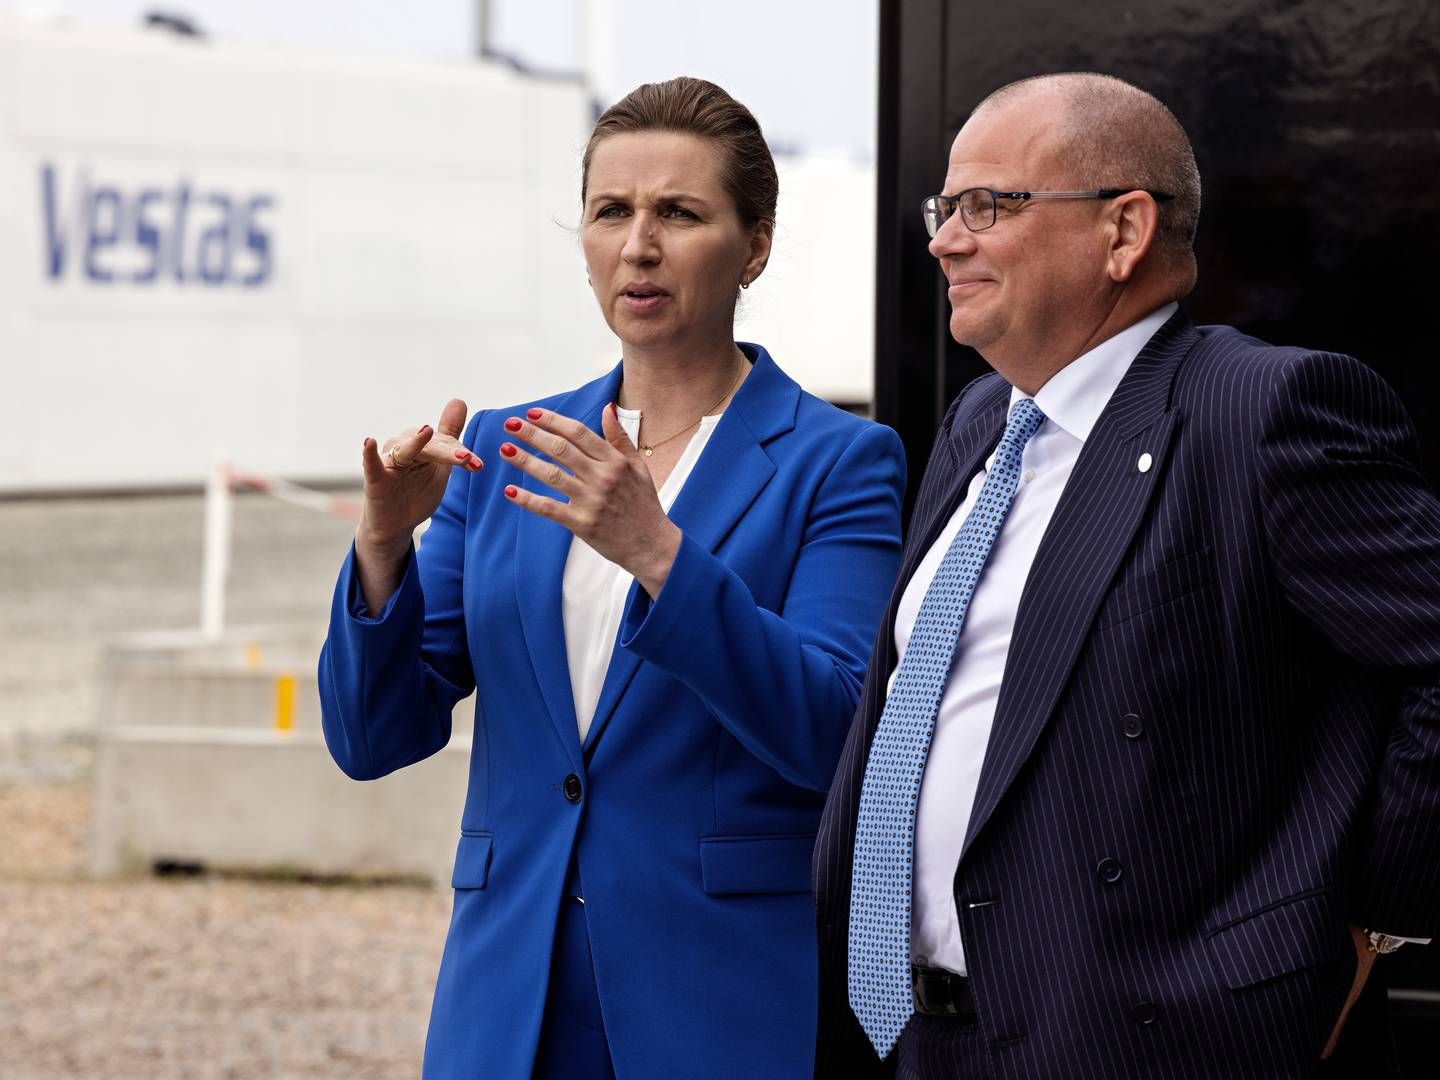 Adm. direktør i Vestas Henrik Andersen sammen med statsminister Mette Frederiksen under besøg hos Vestas i 2022. | Foto: Jacob Ehrbahn